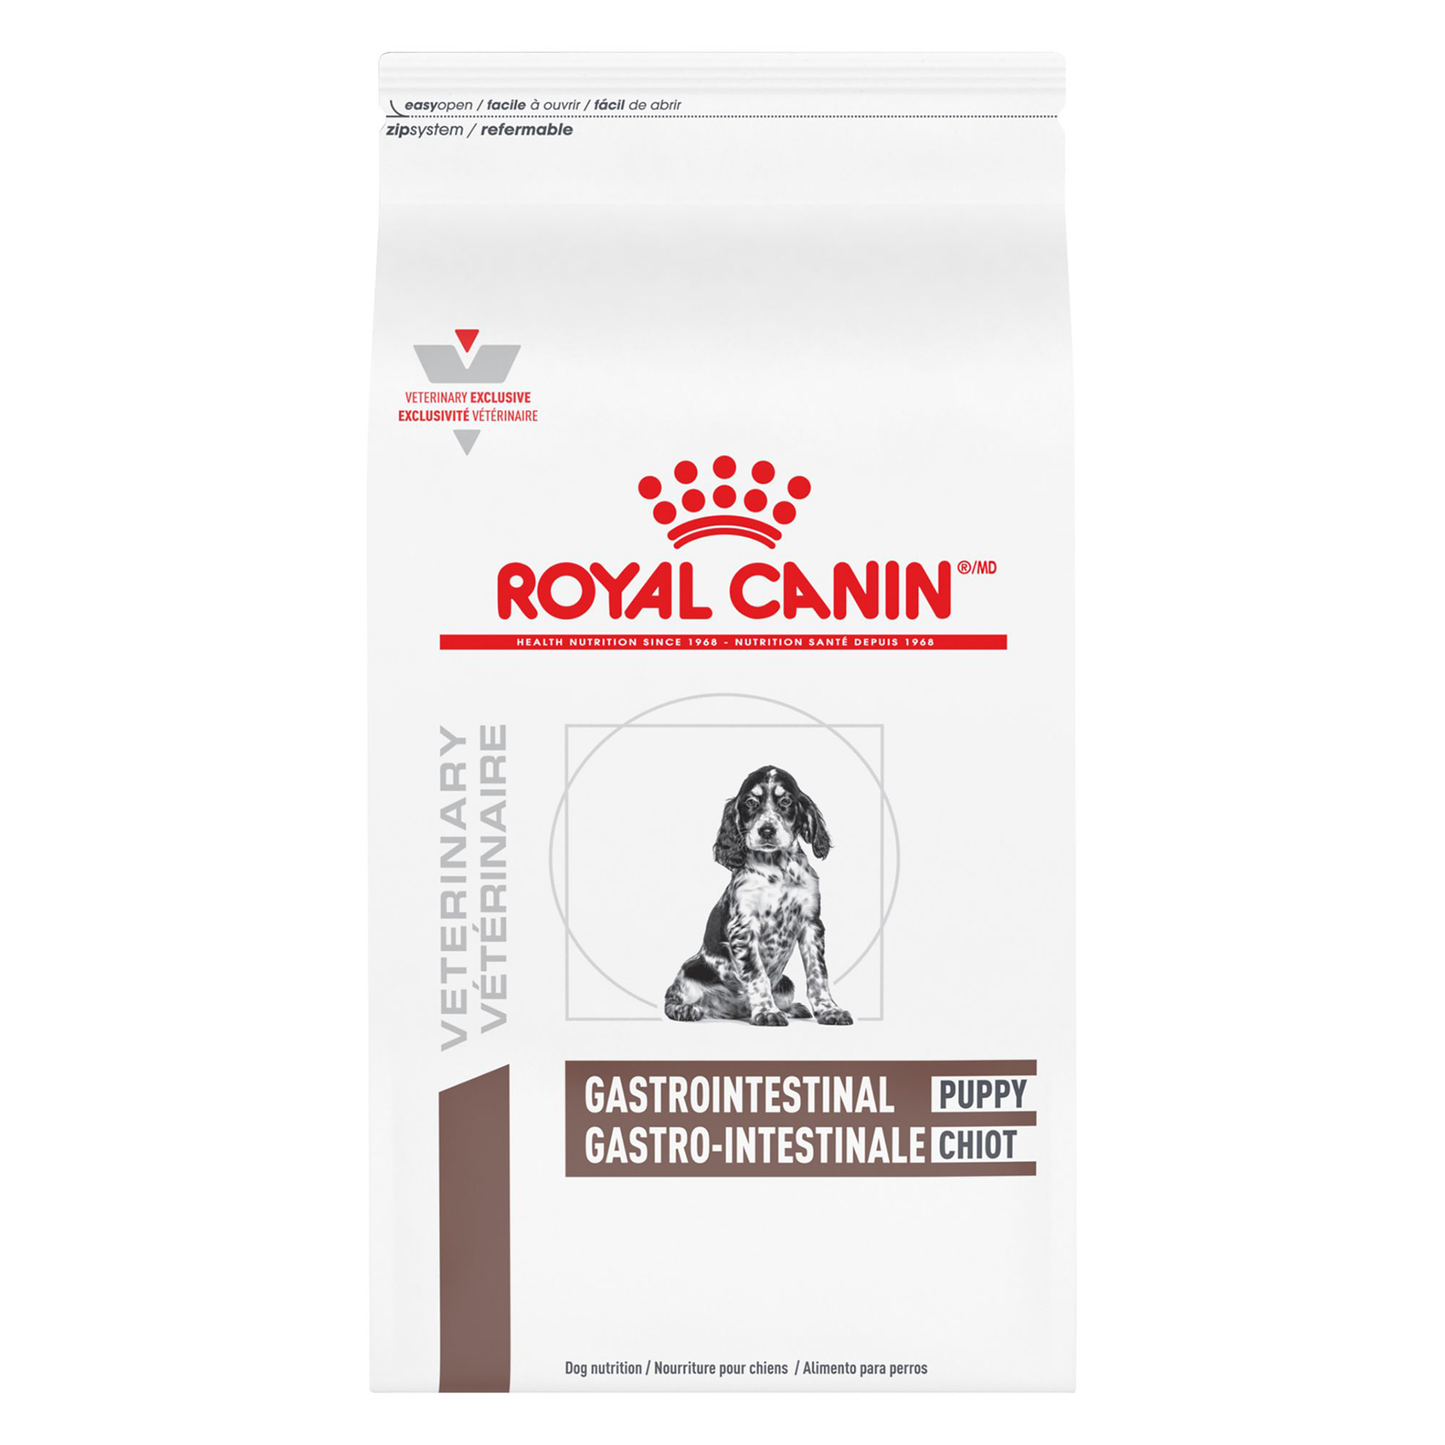 Royal Canin Gastrointestinal Puppy (8.8lbs bag)